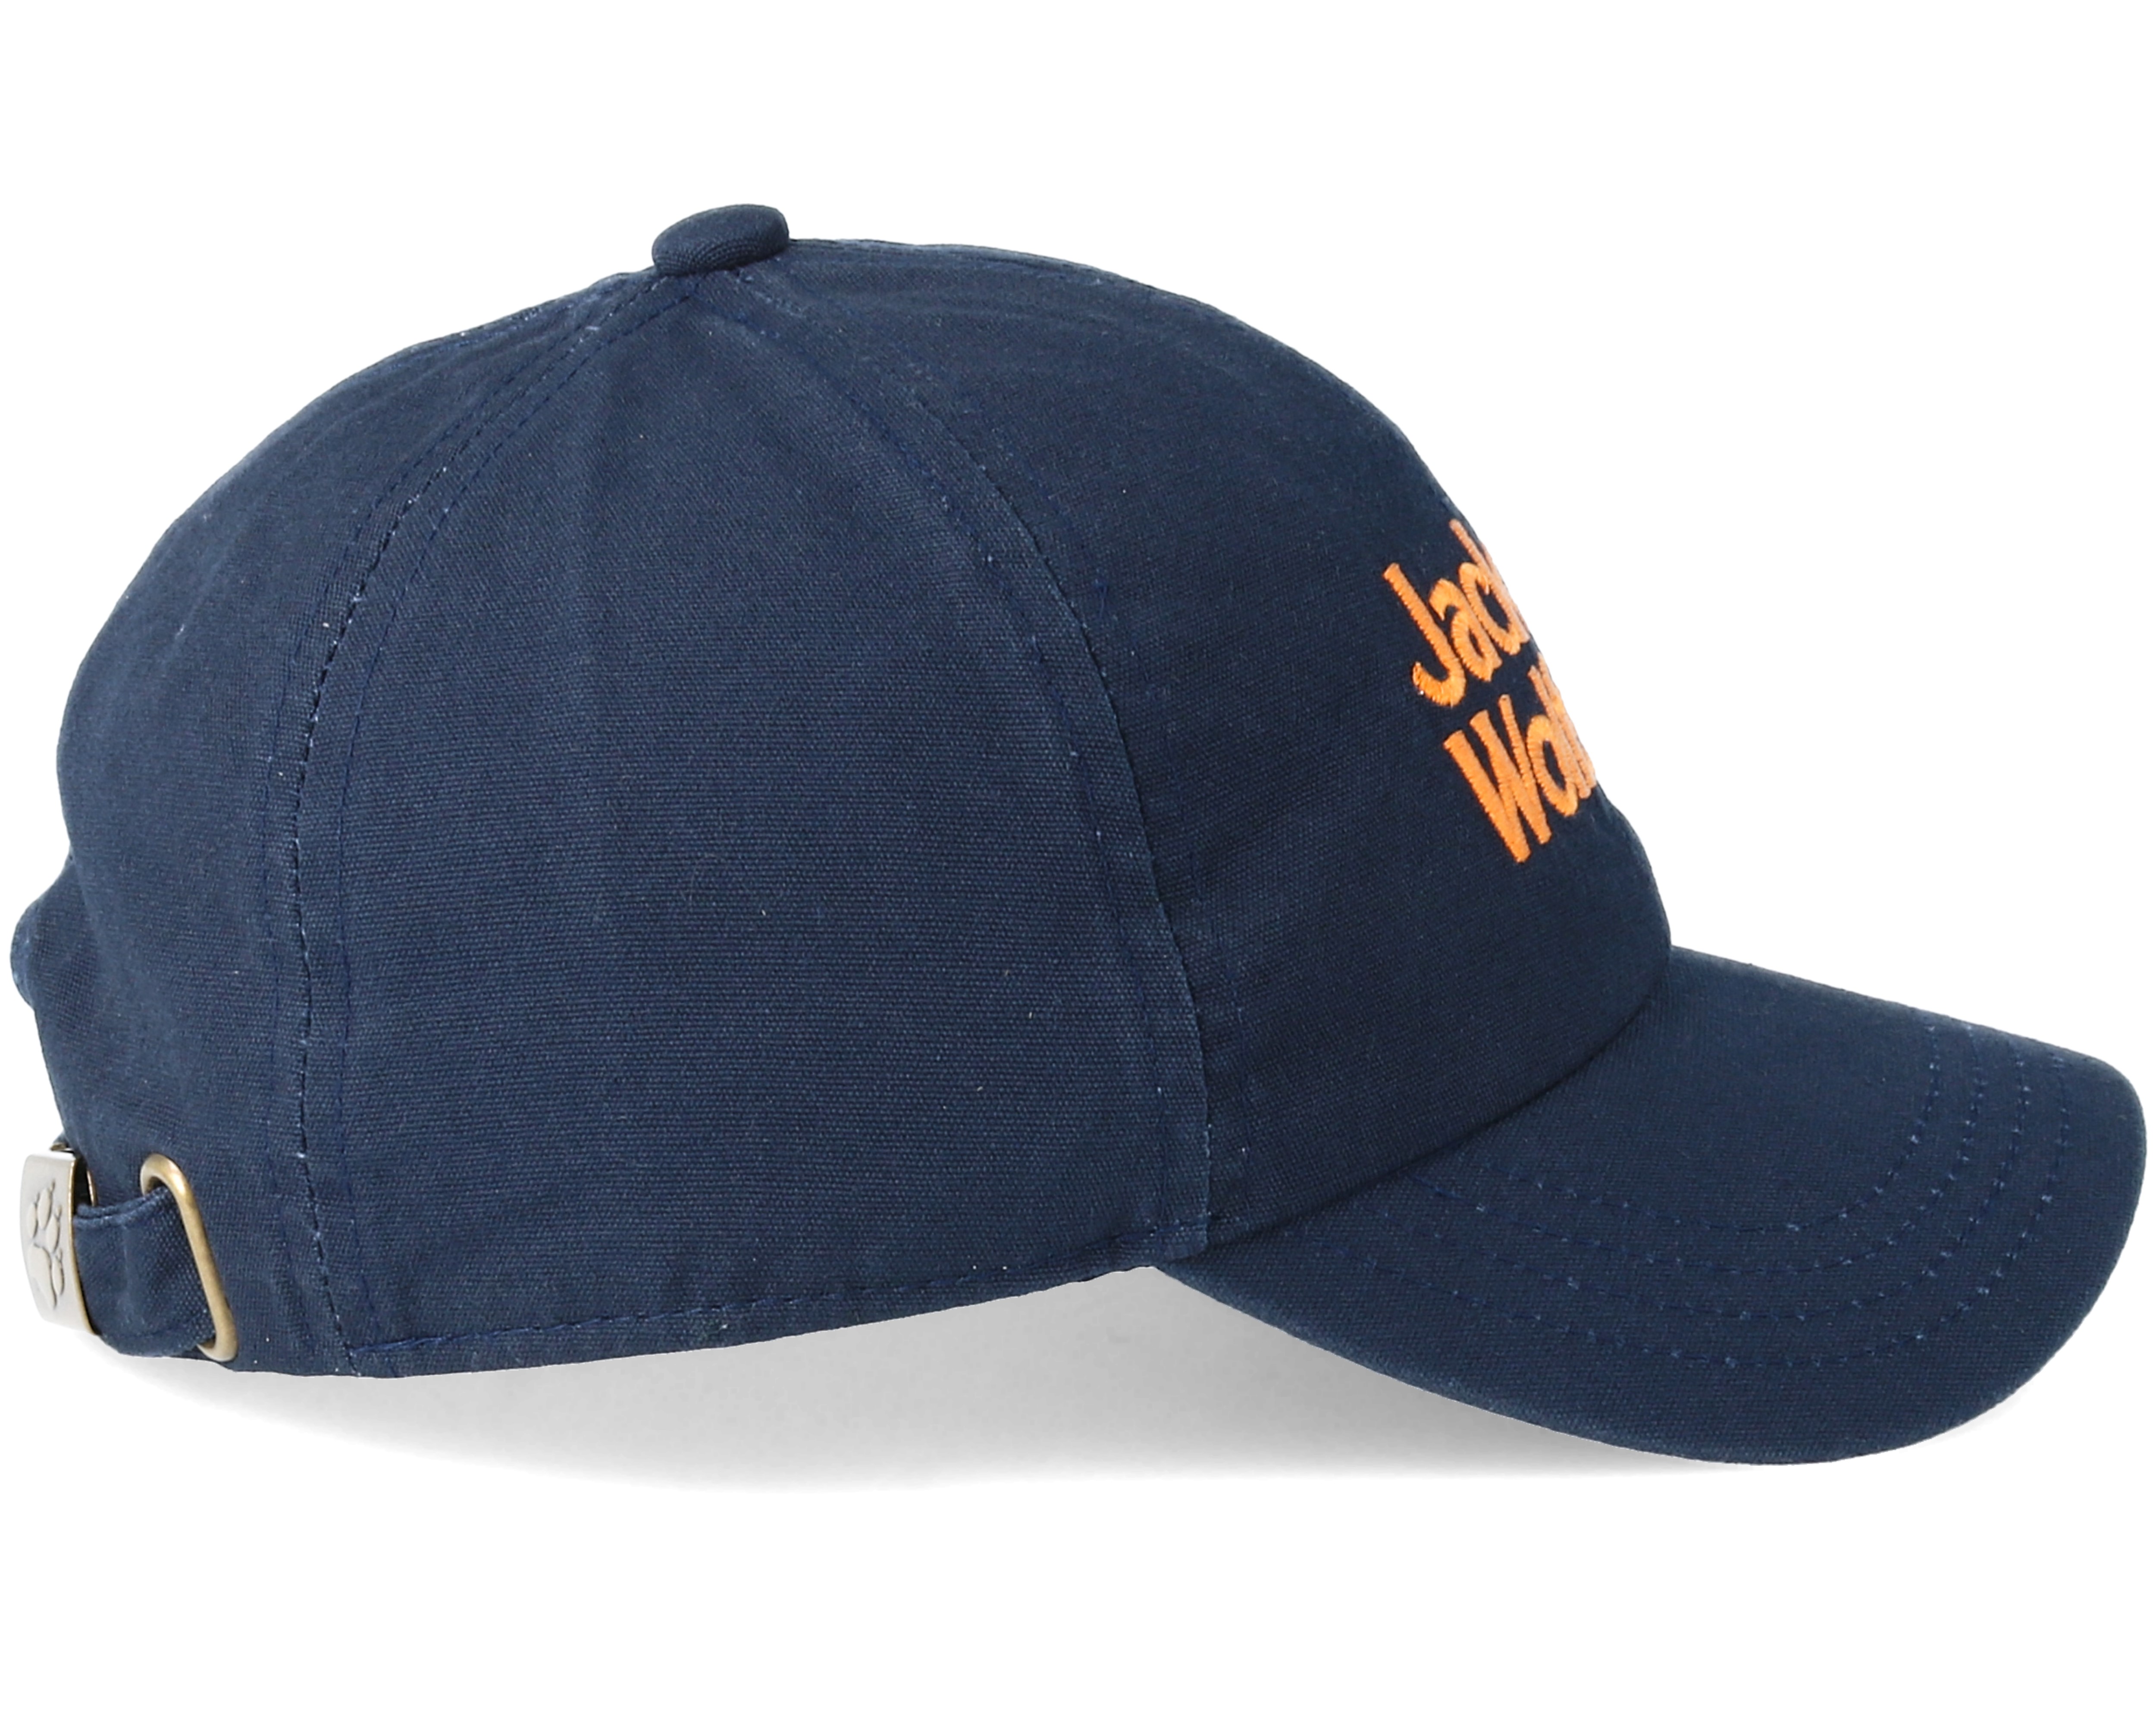 Kids Baseball Cap Night Blue Adjustable - Jack Wolfskin caps ...